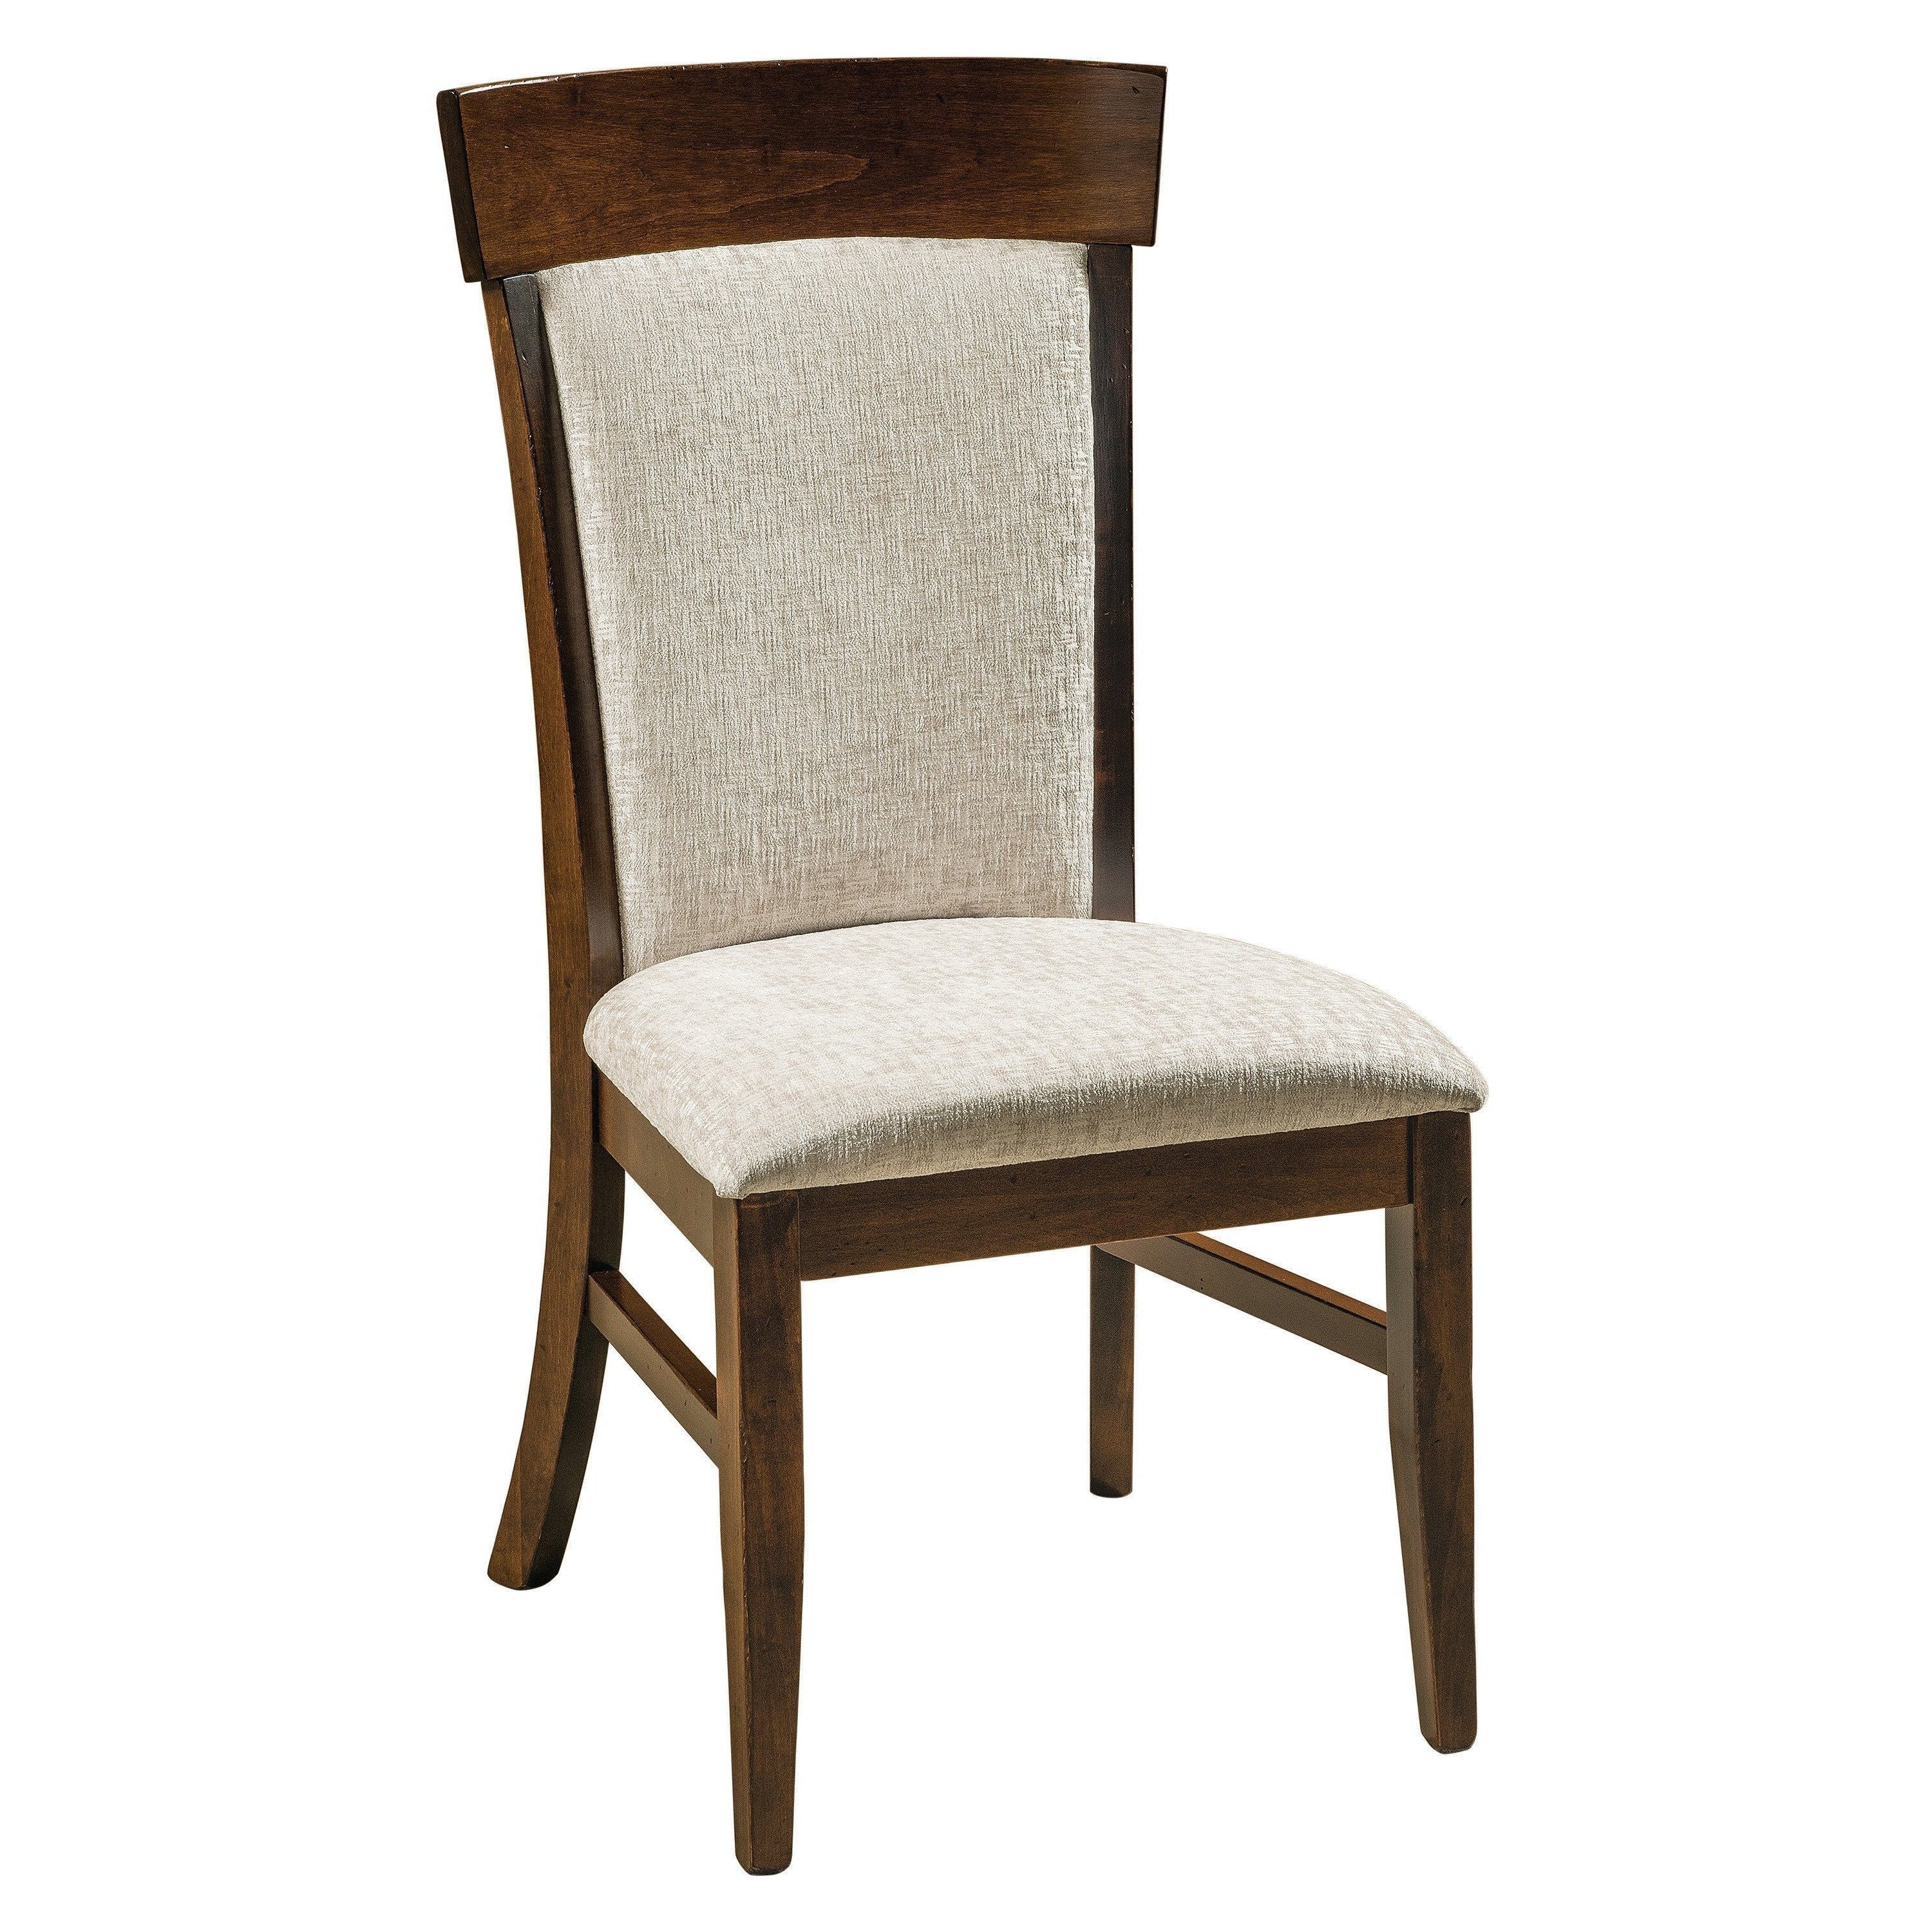 riverside-side-chair-260284.jpg